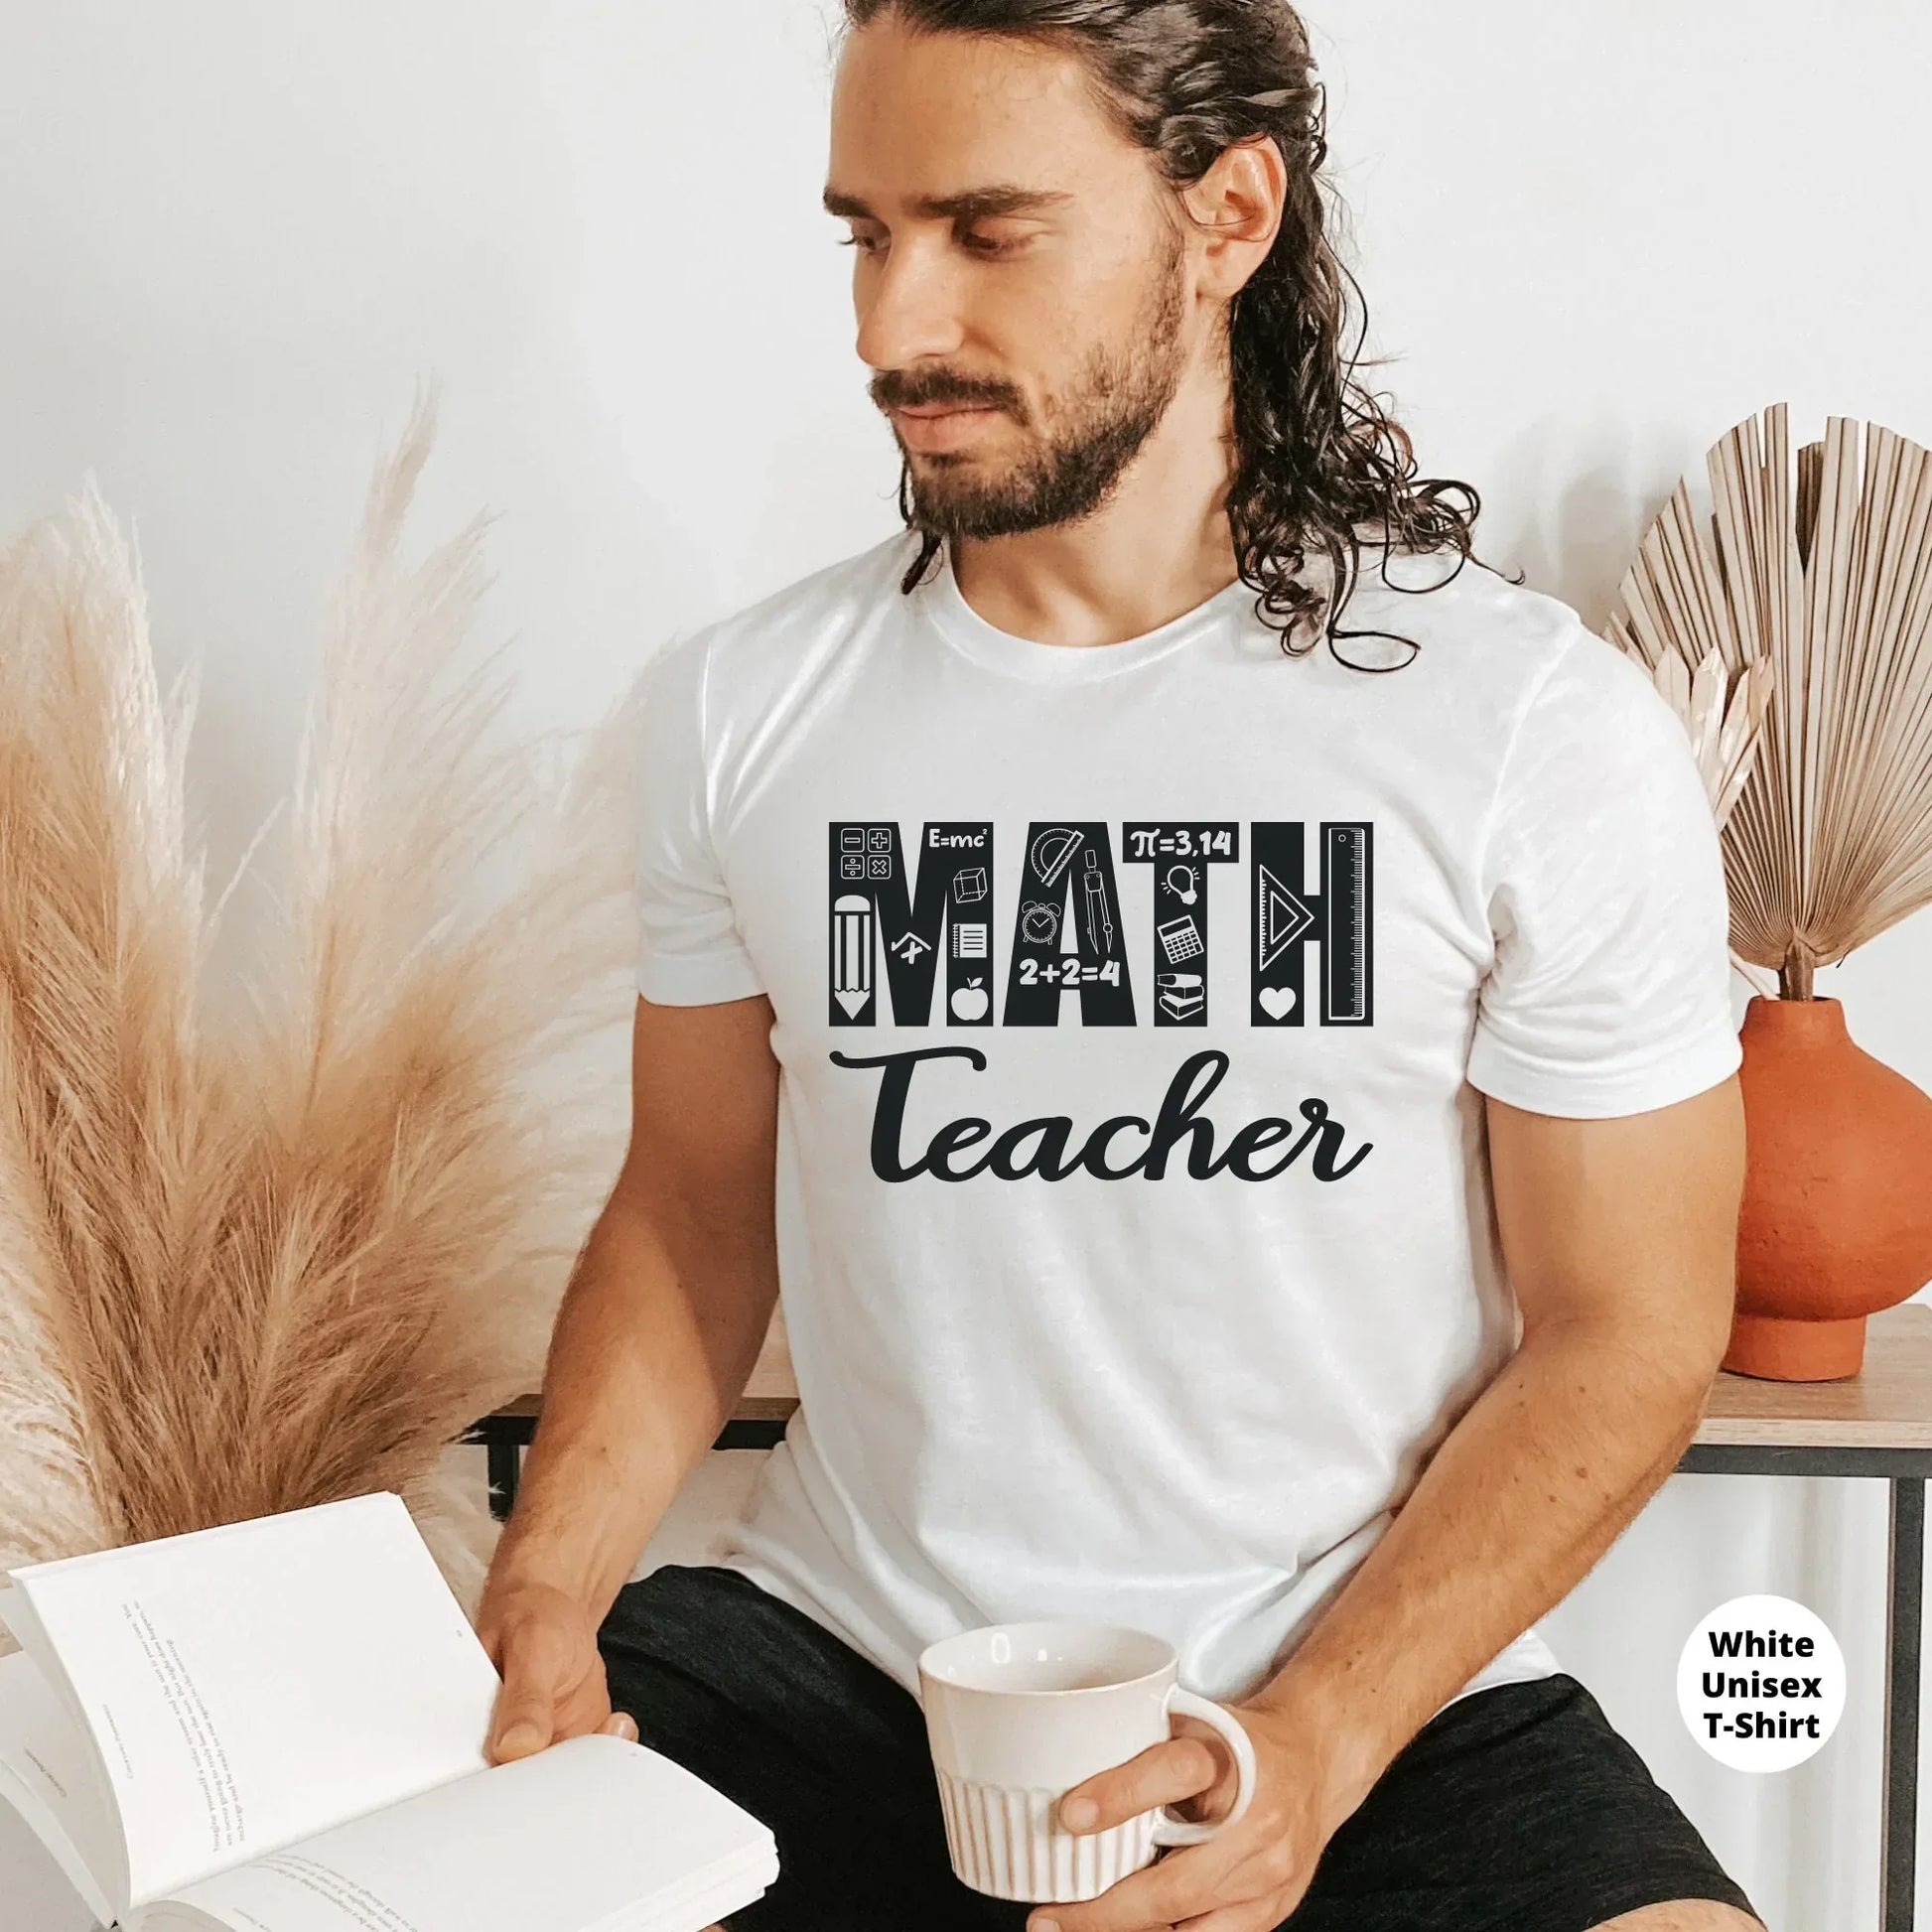 Math Teacher Shirt| Appreciation Gift, Specials Elementary/High School Teacher, Special Education, Back to School, 1st Day, Holiday Present HMDesignStudioUS